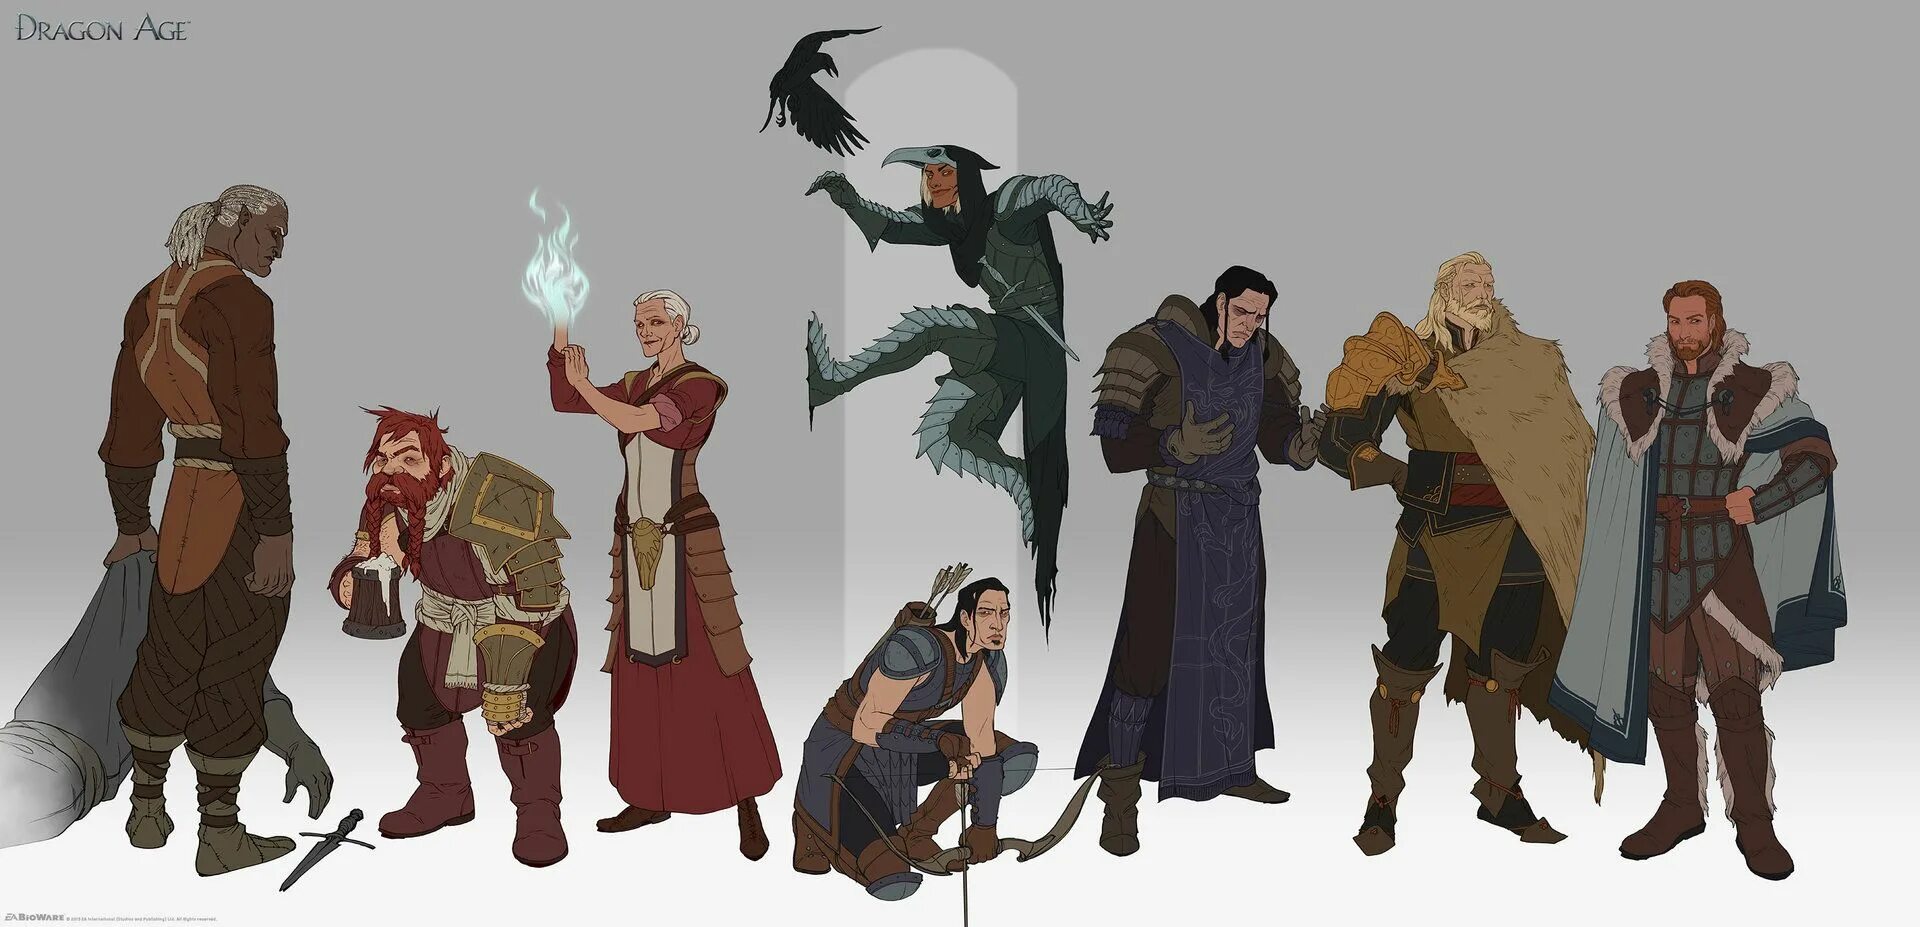 Dragon age world. Концепт арт Dragon age Inquisition. Dragon age концепты Matt Rhodes. Matt Rhodes Dragon age. Dragon age концепт арт.